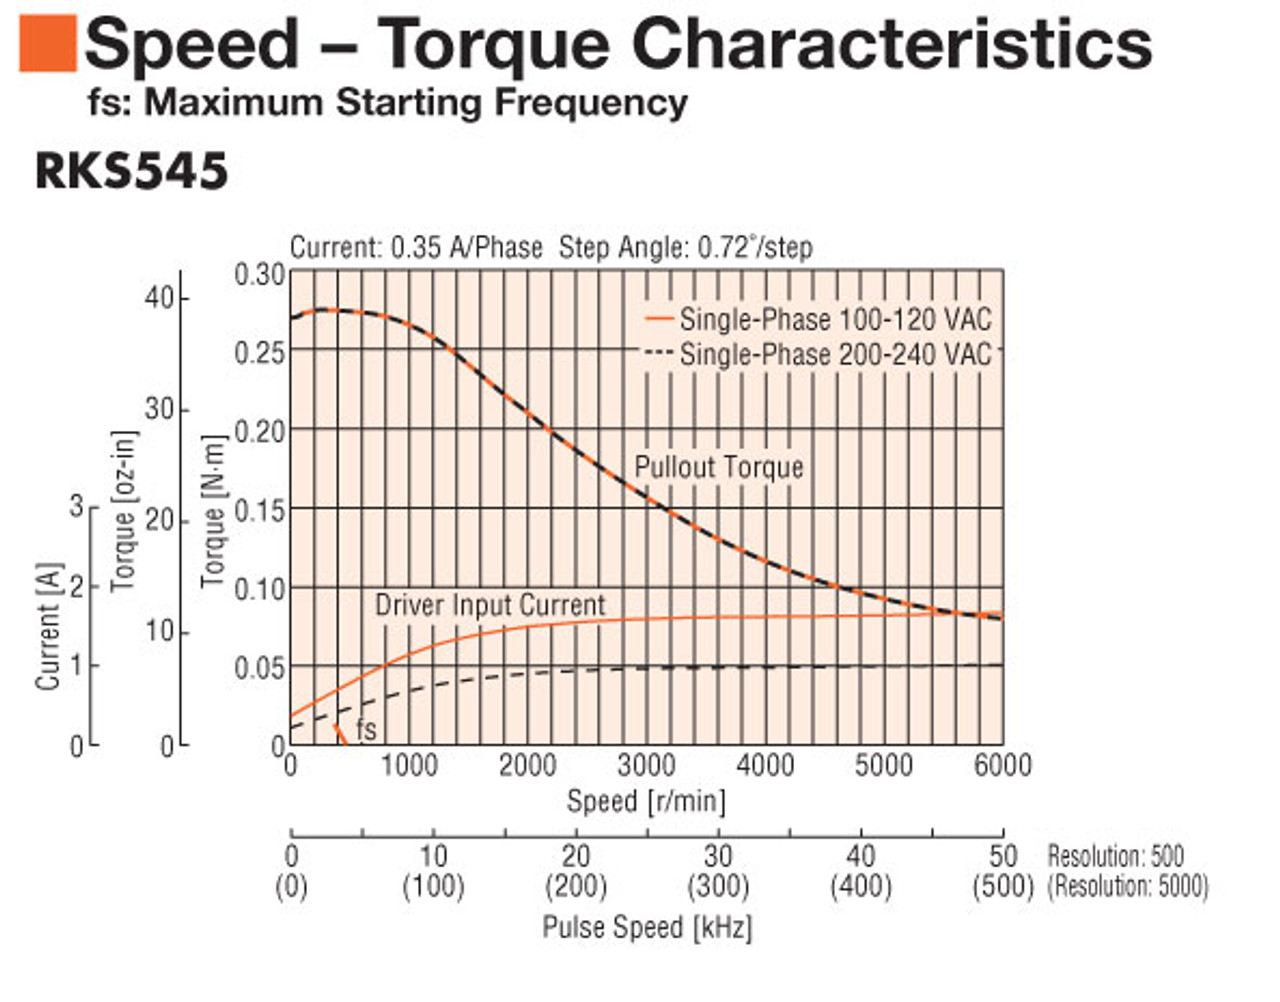 PKE545BC - Speed-Torque